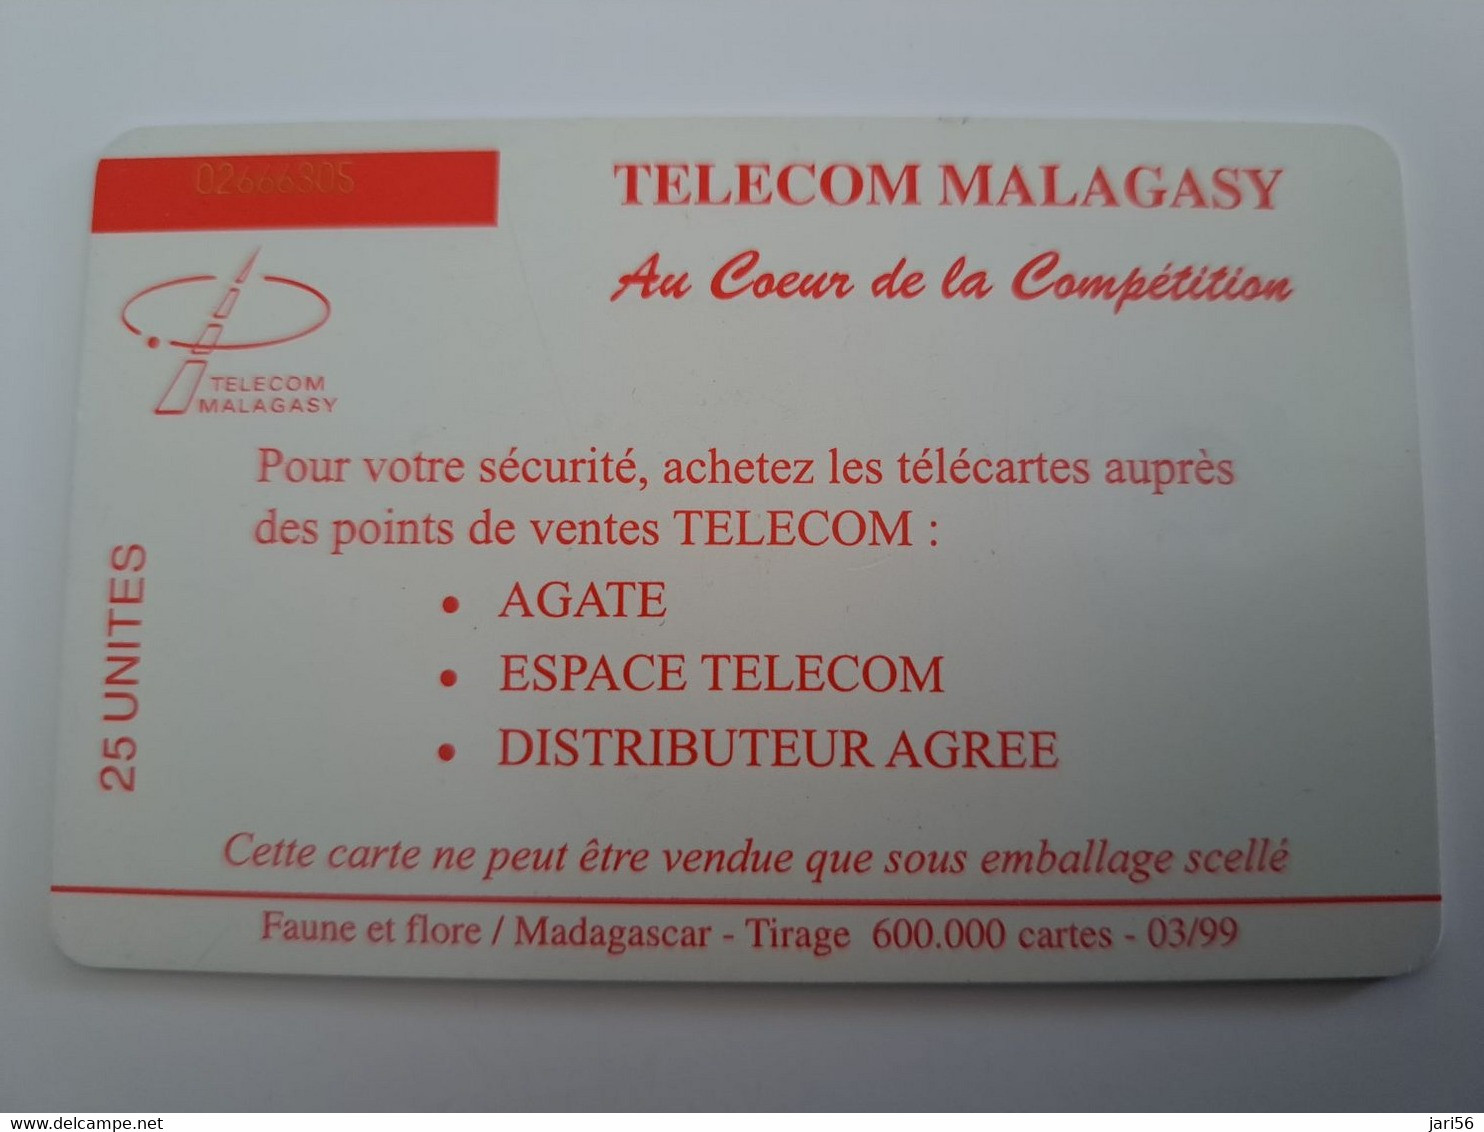 MADAGASCAR/MALAGACY CHIPCARD 25 UNITS / MAKI MONKEY/ FLOWERS DATE 03/99  USED CARD     ** 11920** - Madagascar